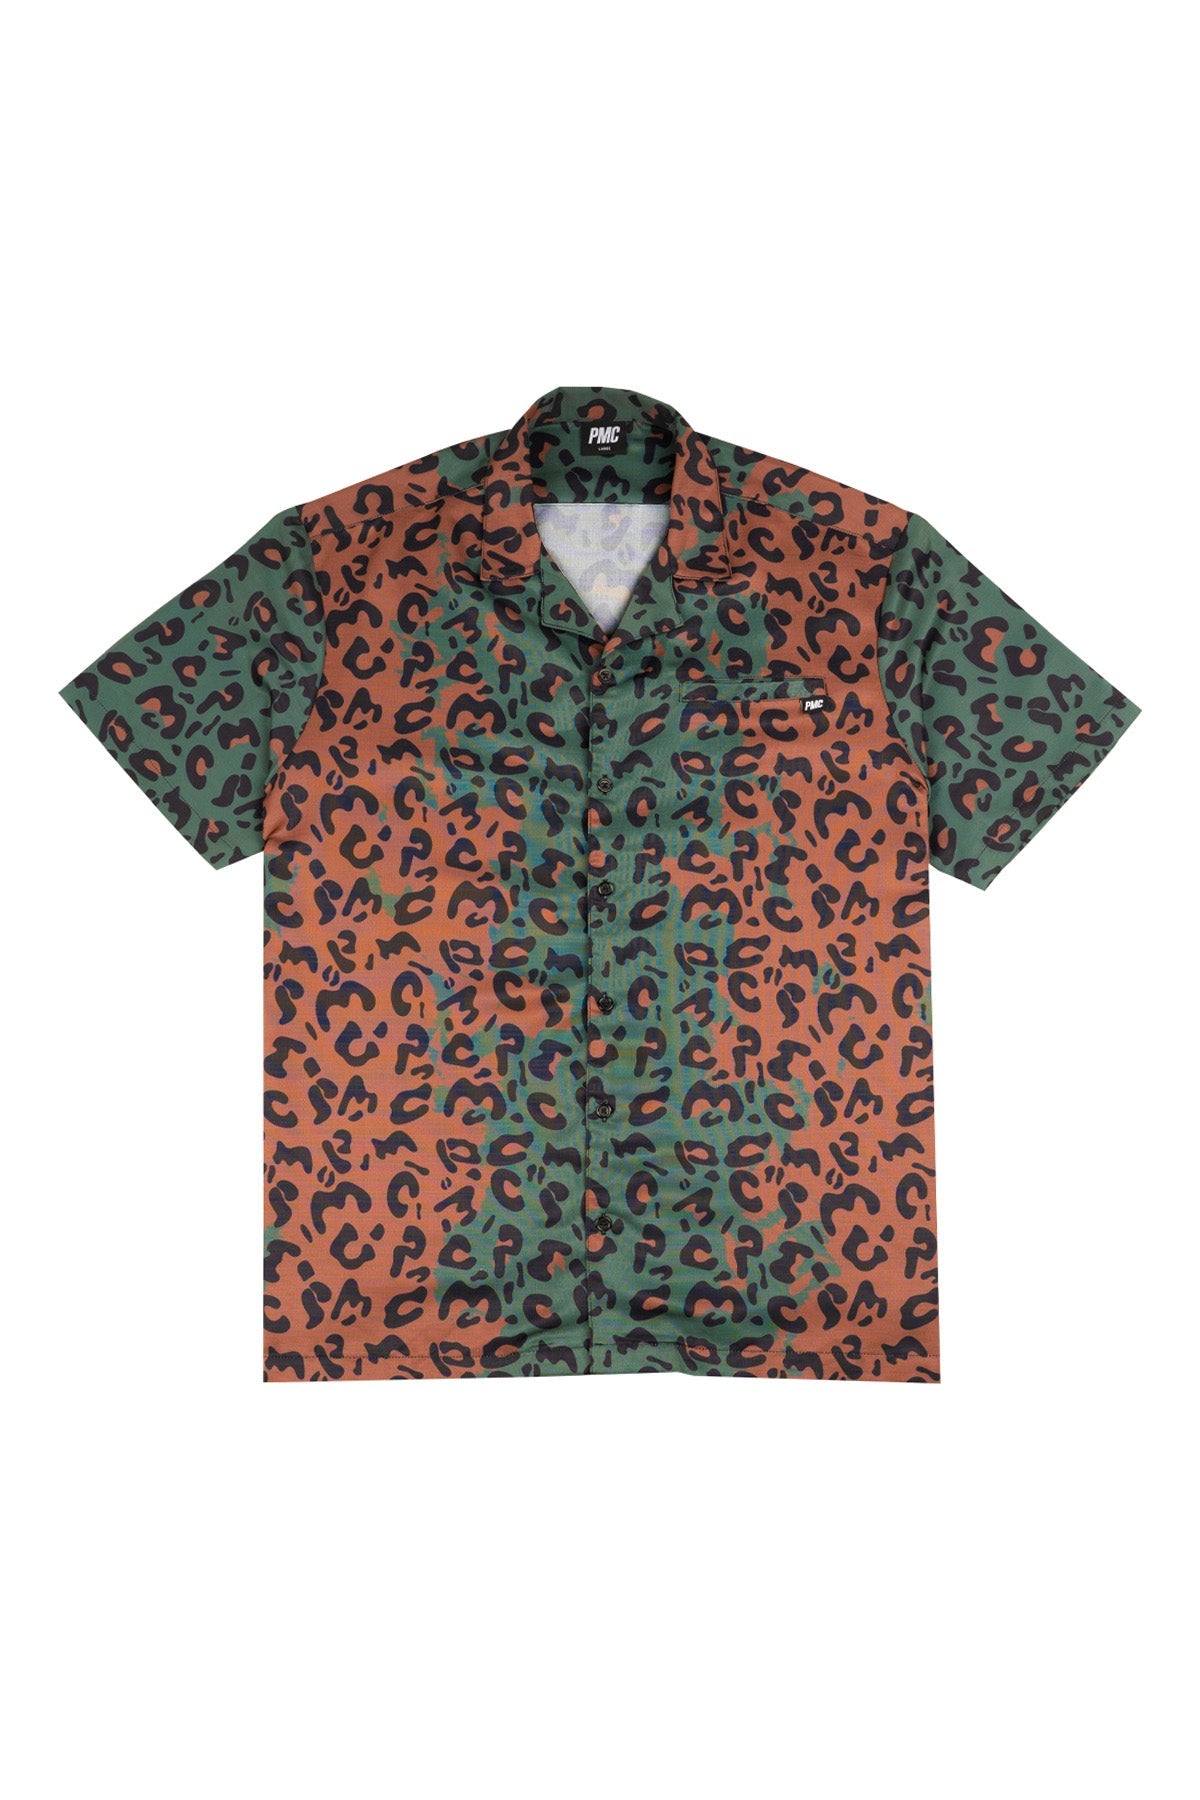 Leopard Print Bowling Shirt Green Brown - Archive